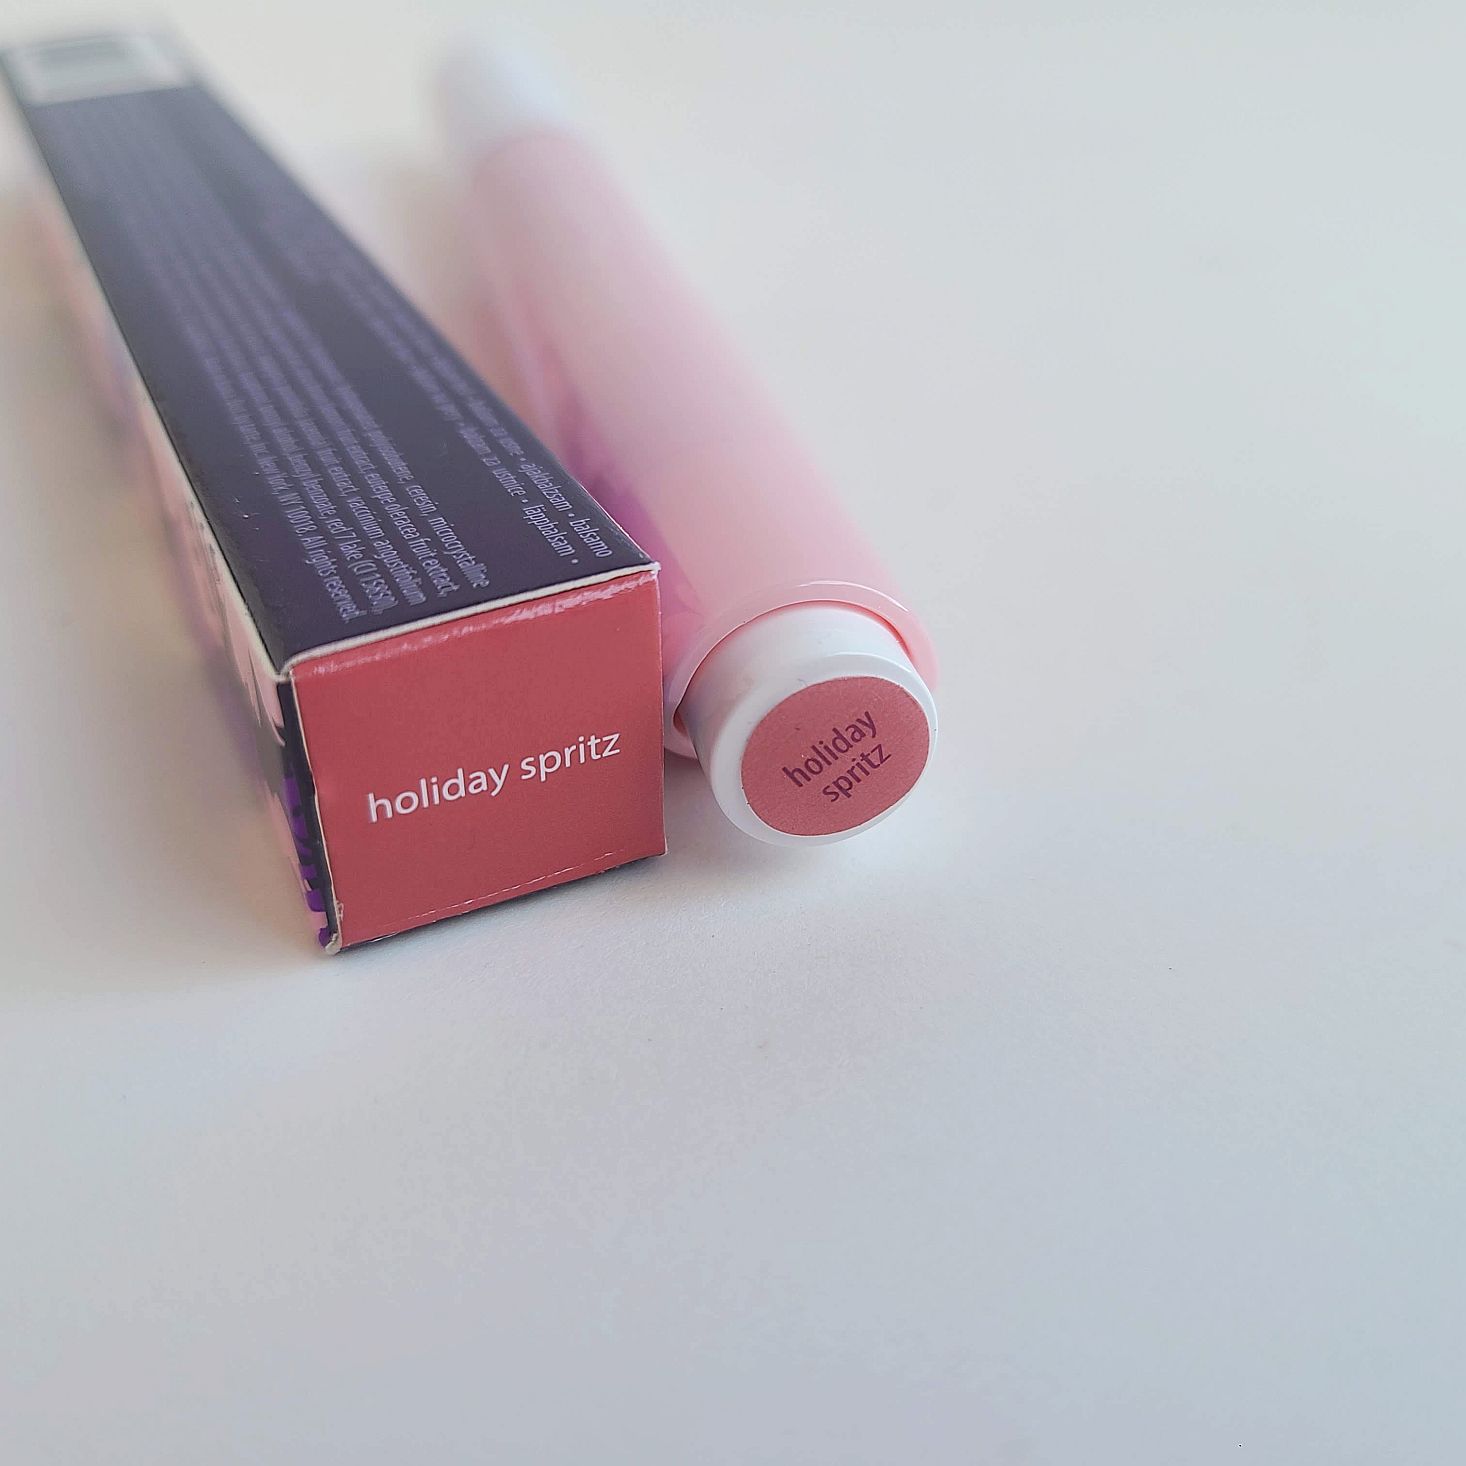 Tarte Create Your Own Kit October 2020 lip pen color